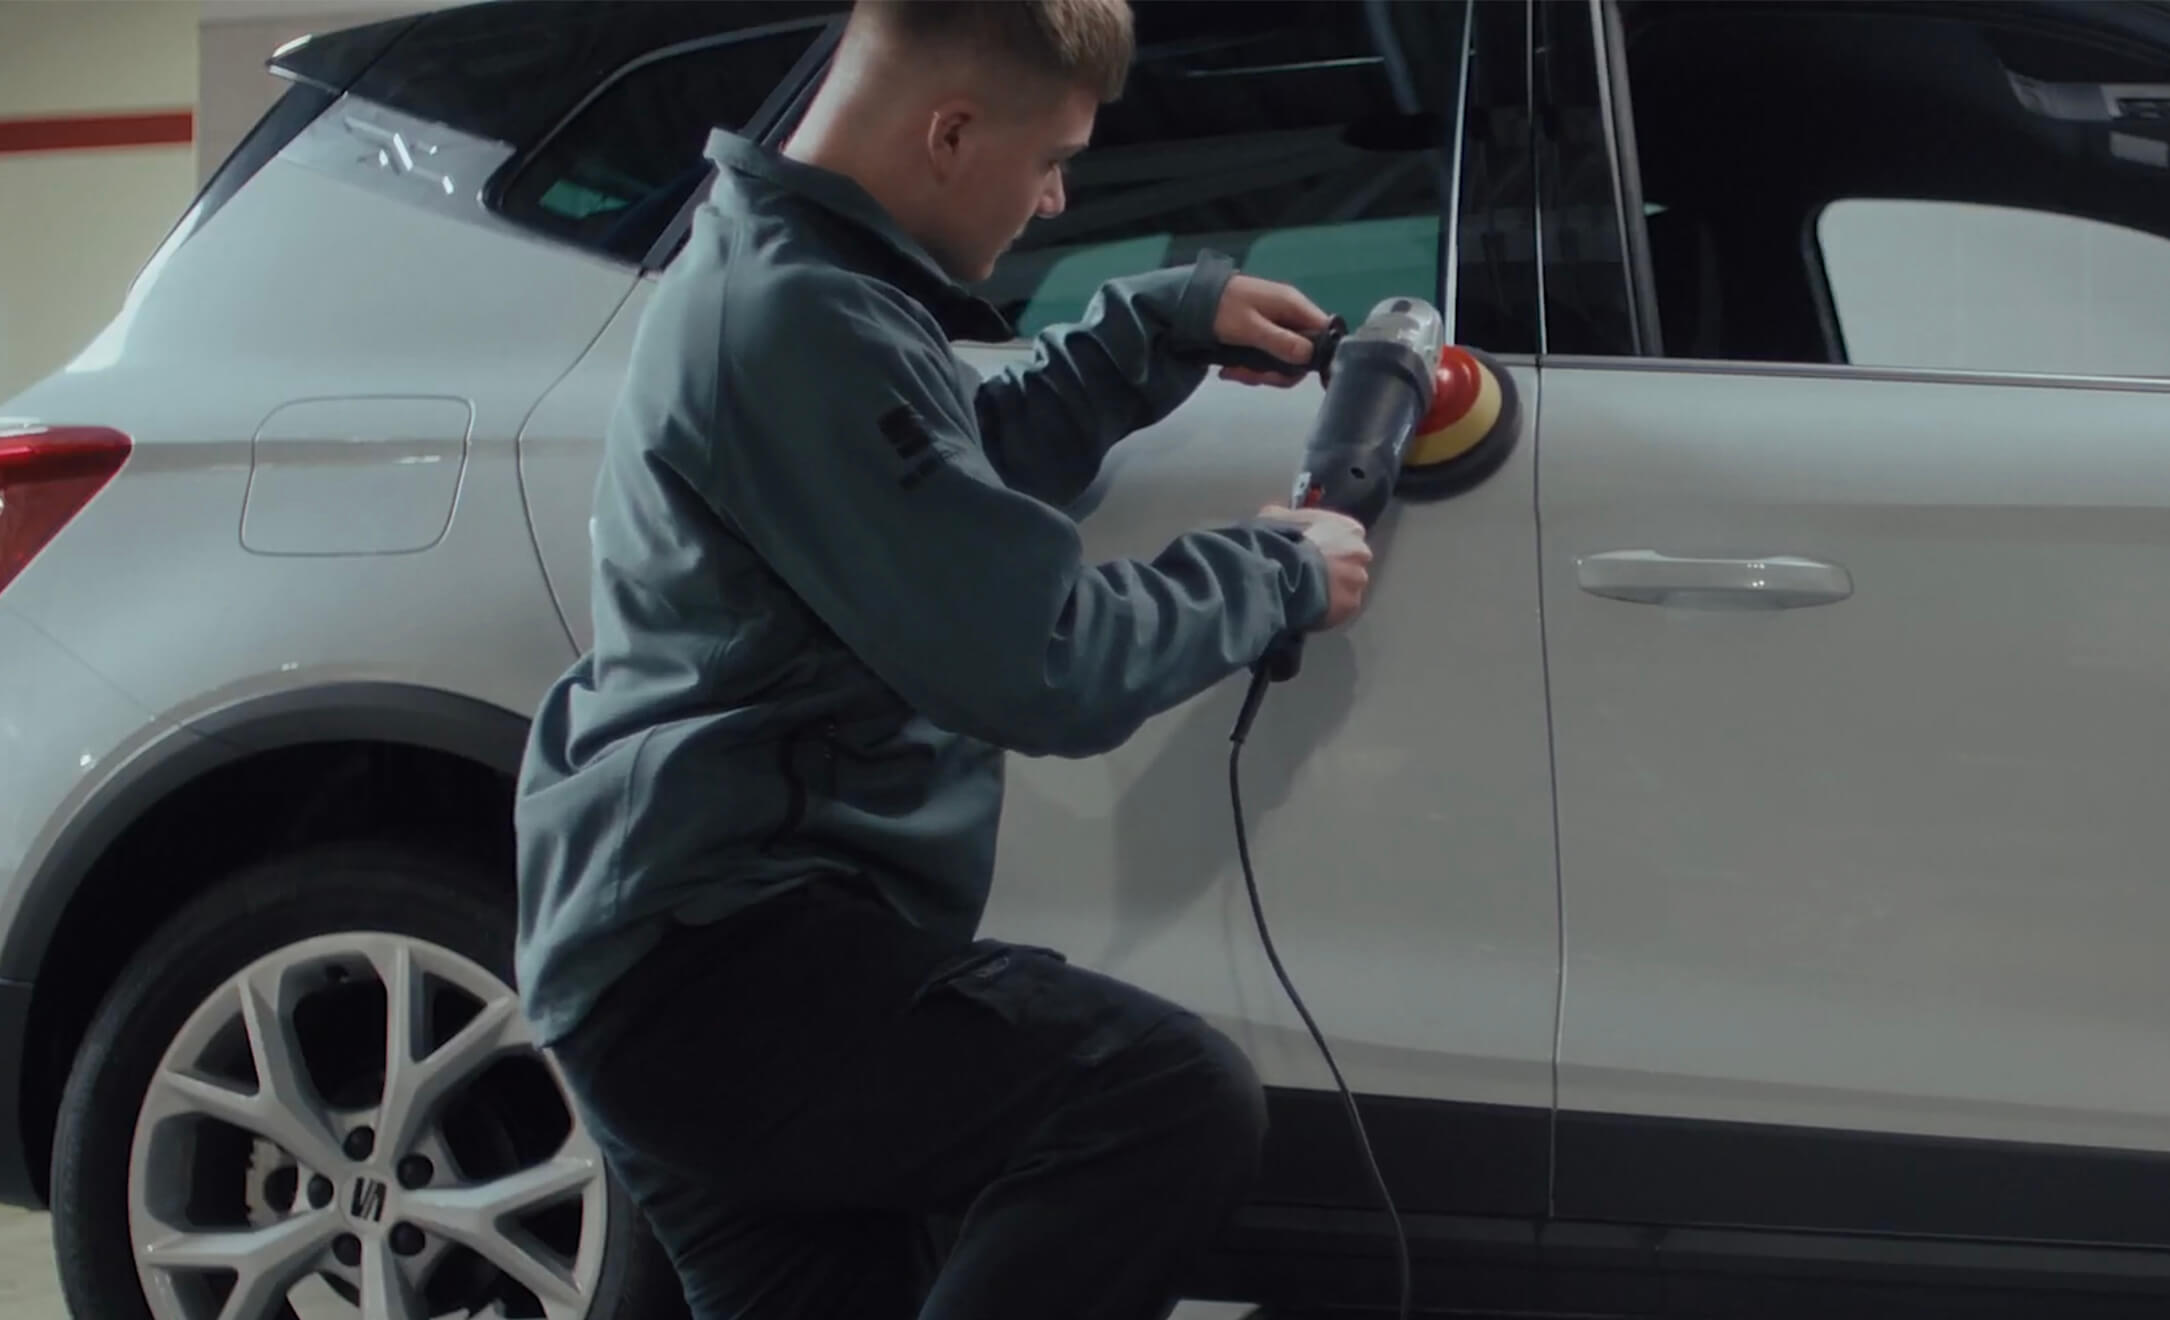 A worker fixing a car door